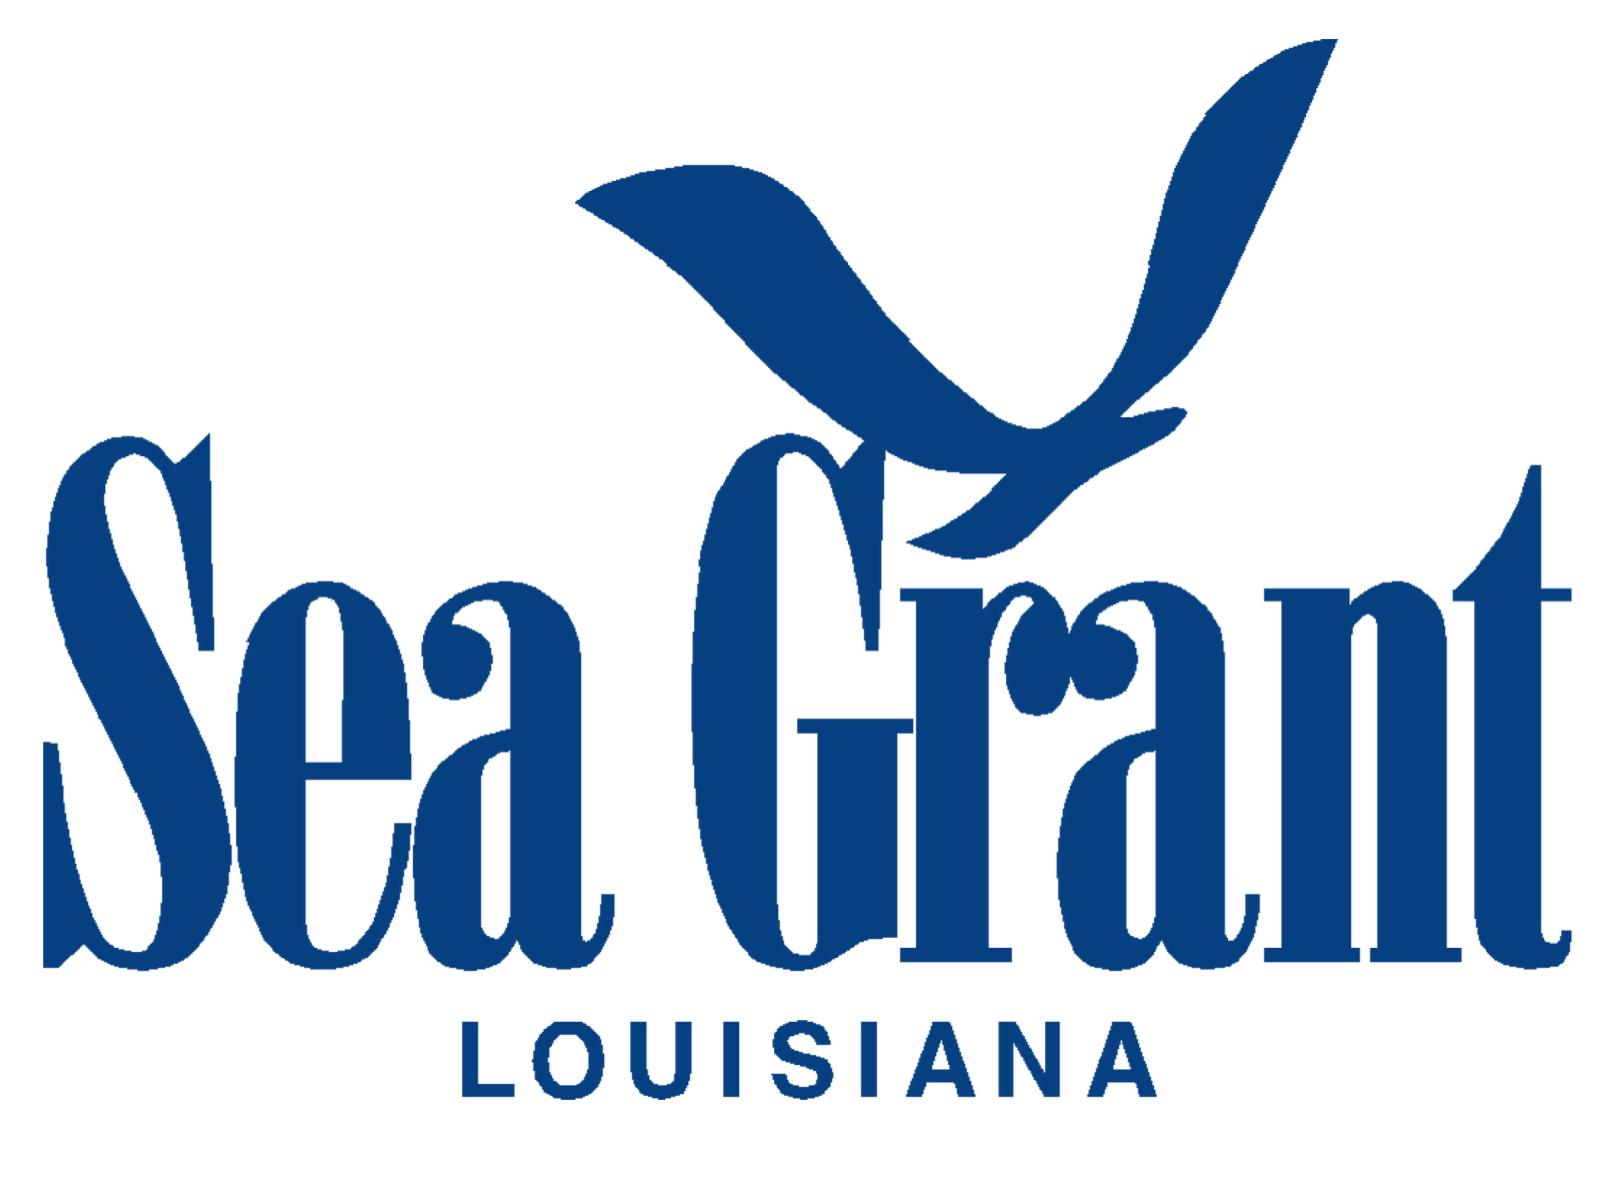 The Louisiana Logo - Logos & Photos | Louisiana Sea Grant